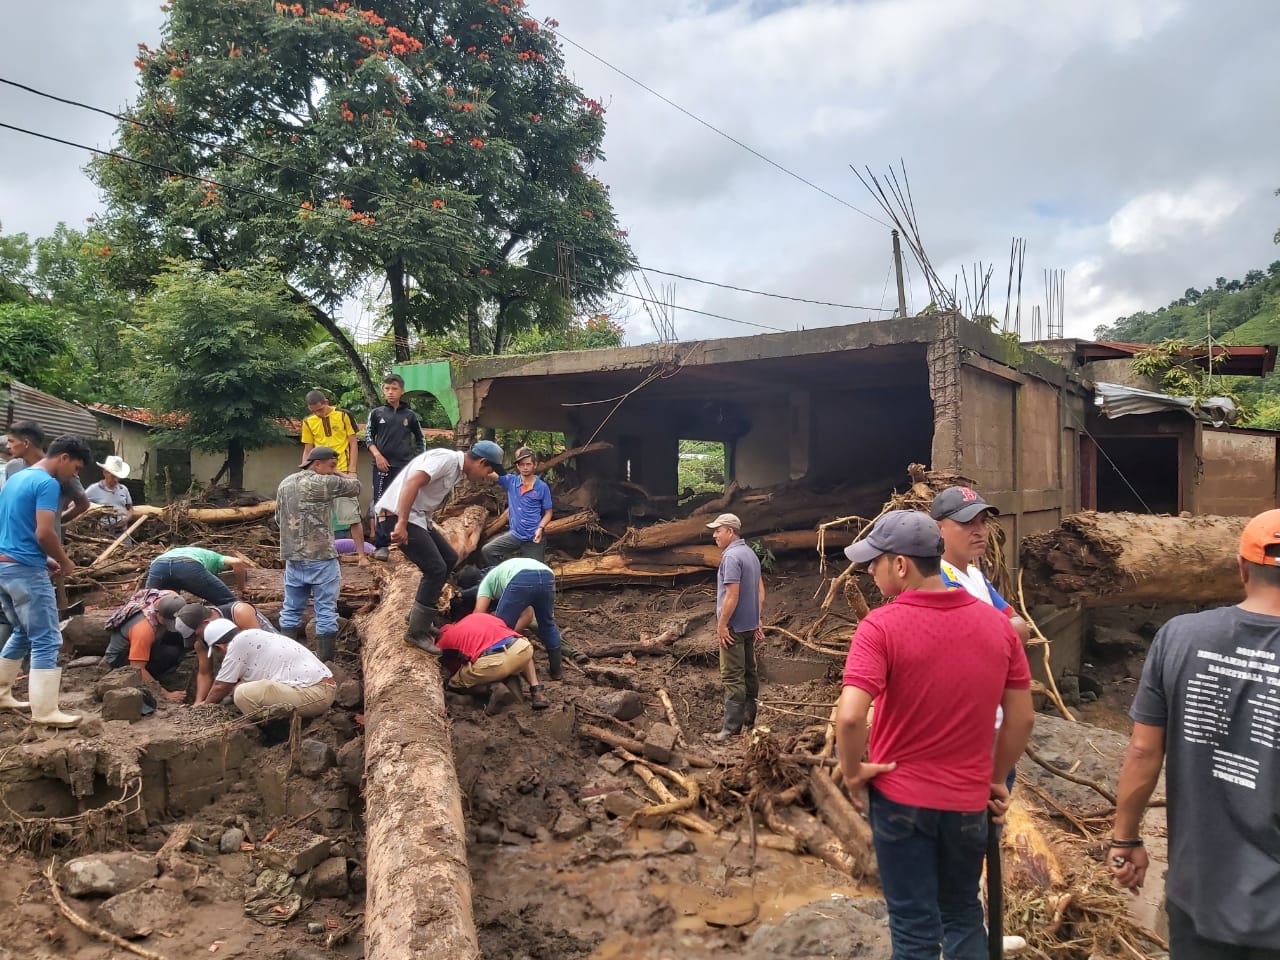 Volunteers from CEPAD in Nicaragua removing tree trunks and repairing the damage or Hurricanes Eta and Iota last year